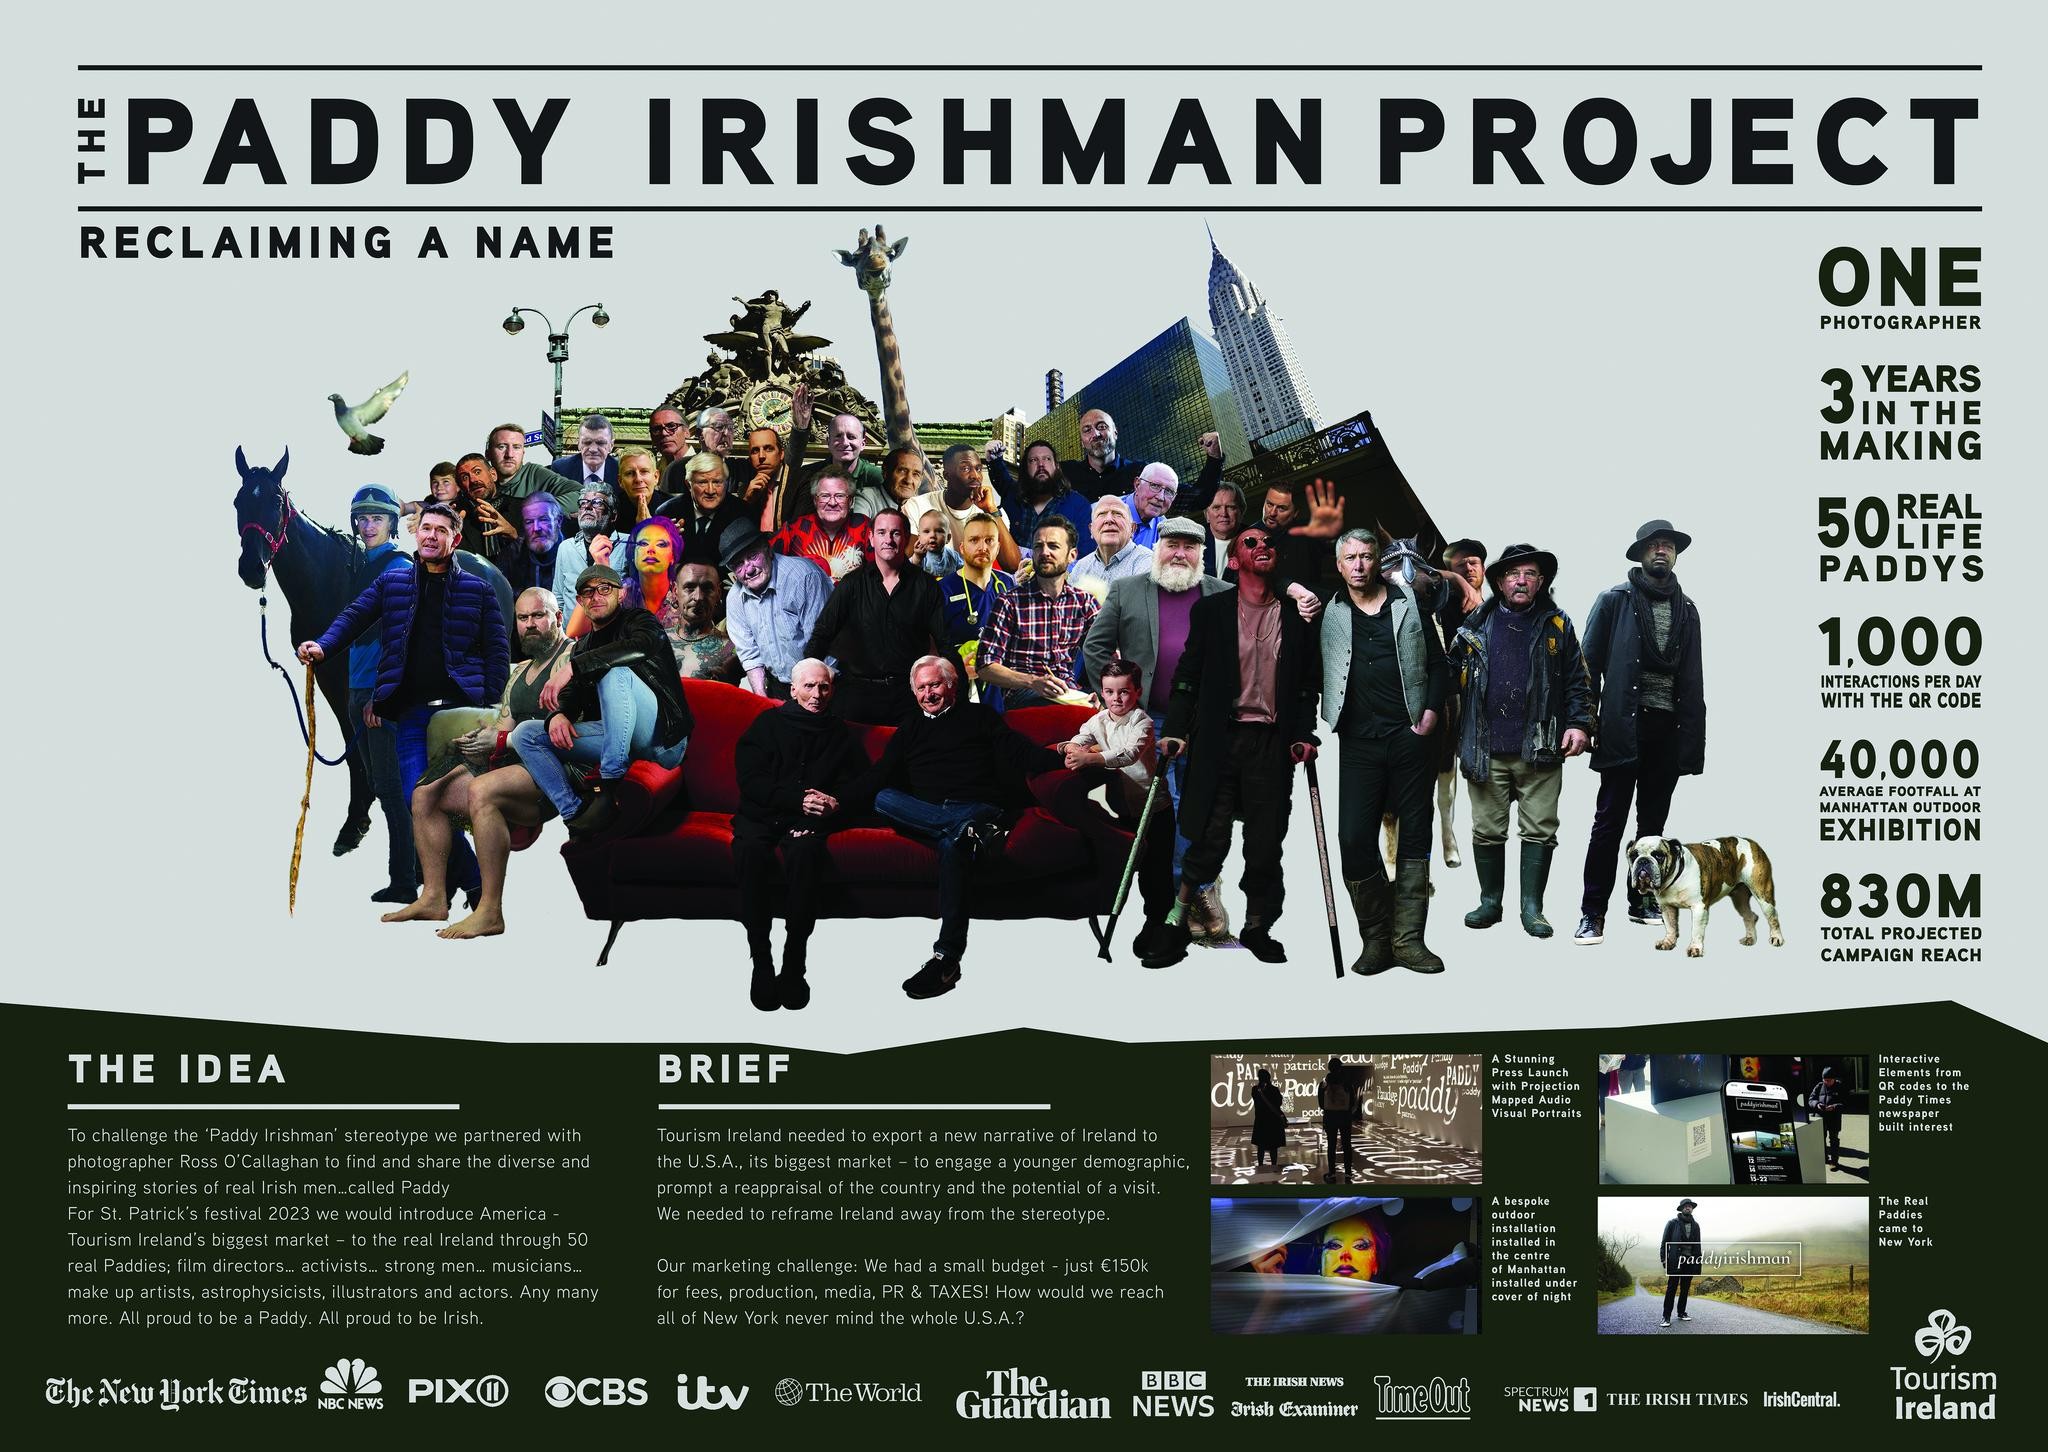 THE PADDY IRISHMAN PROJECT